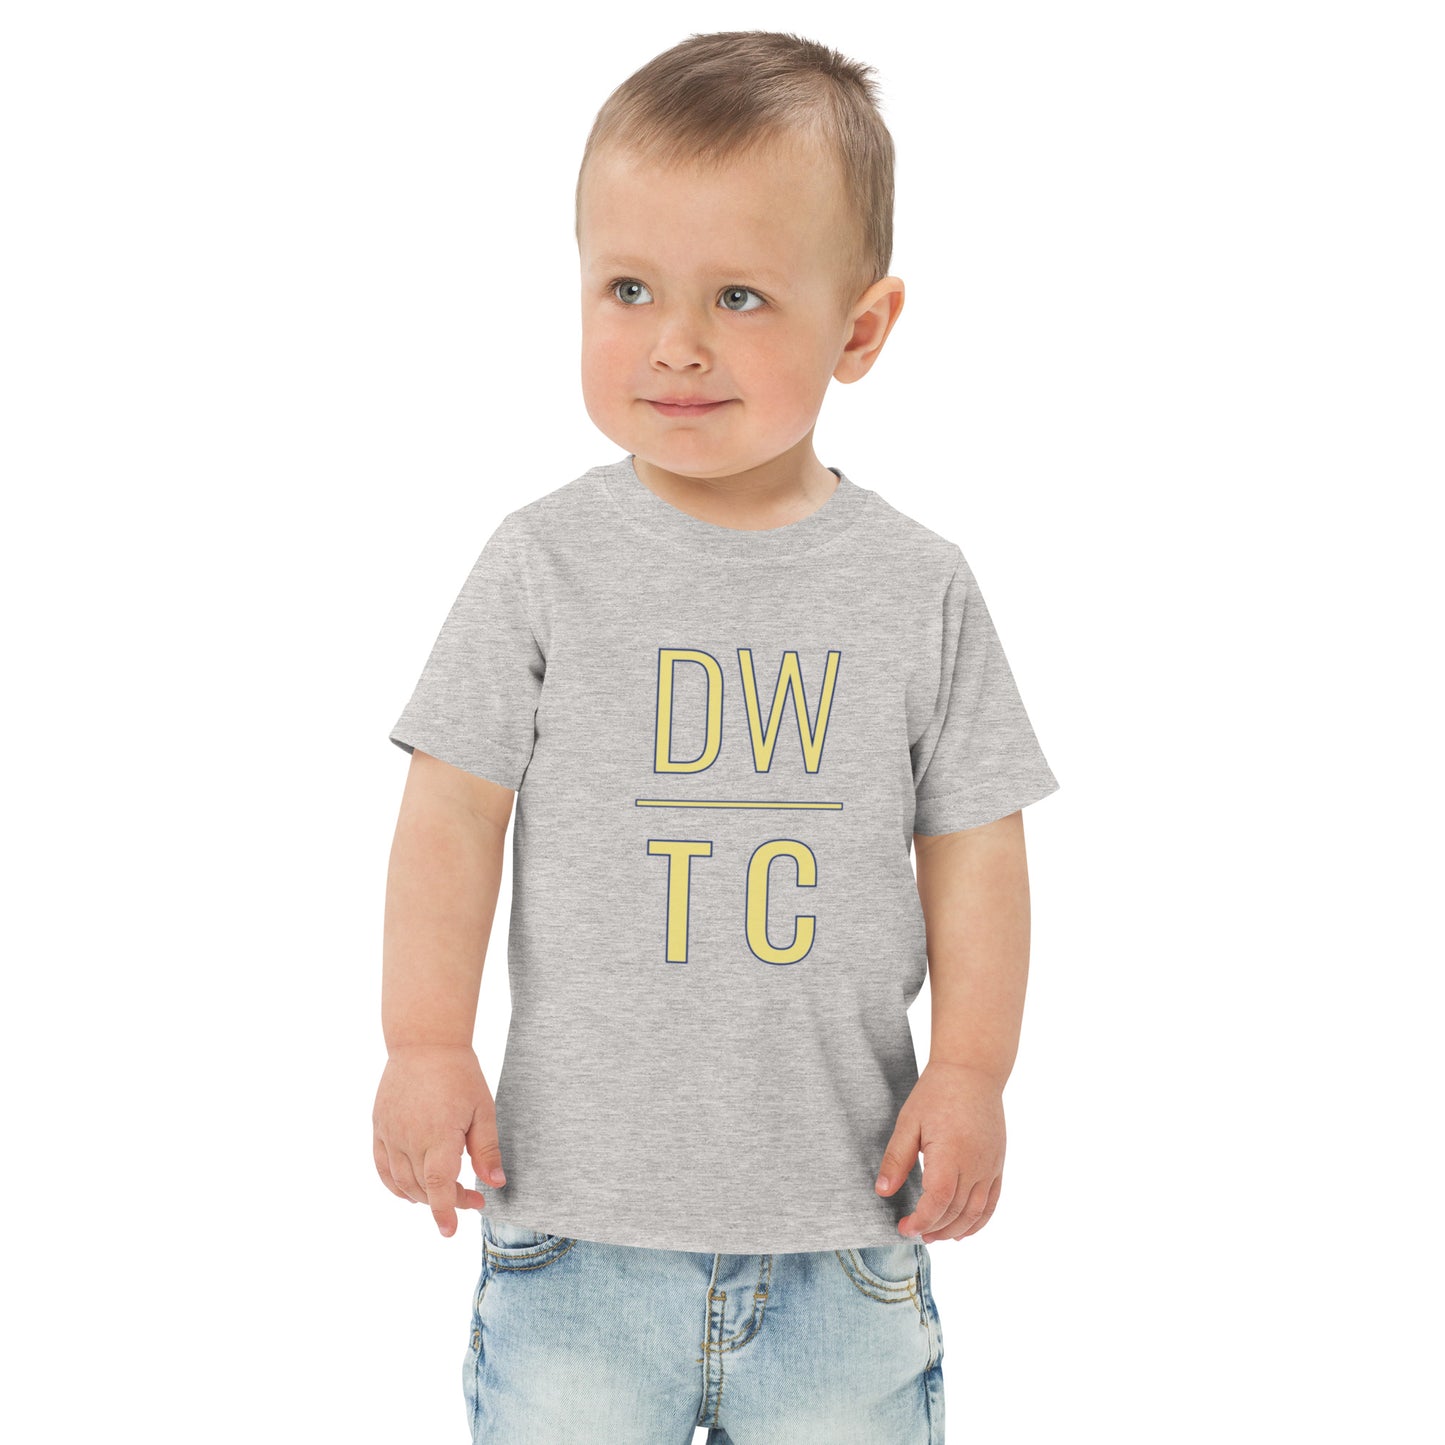 DWTC Toddler T-shirt